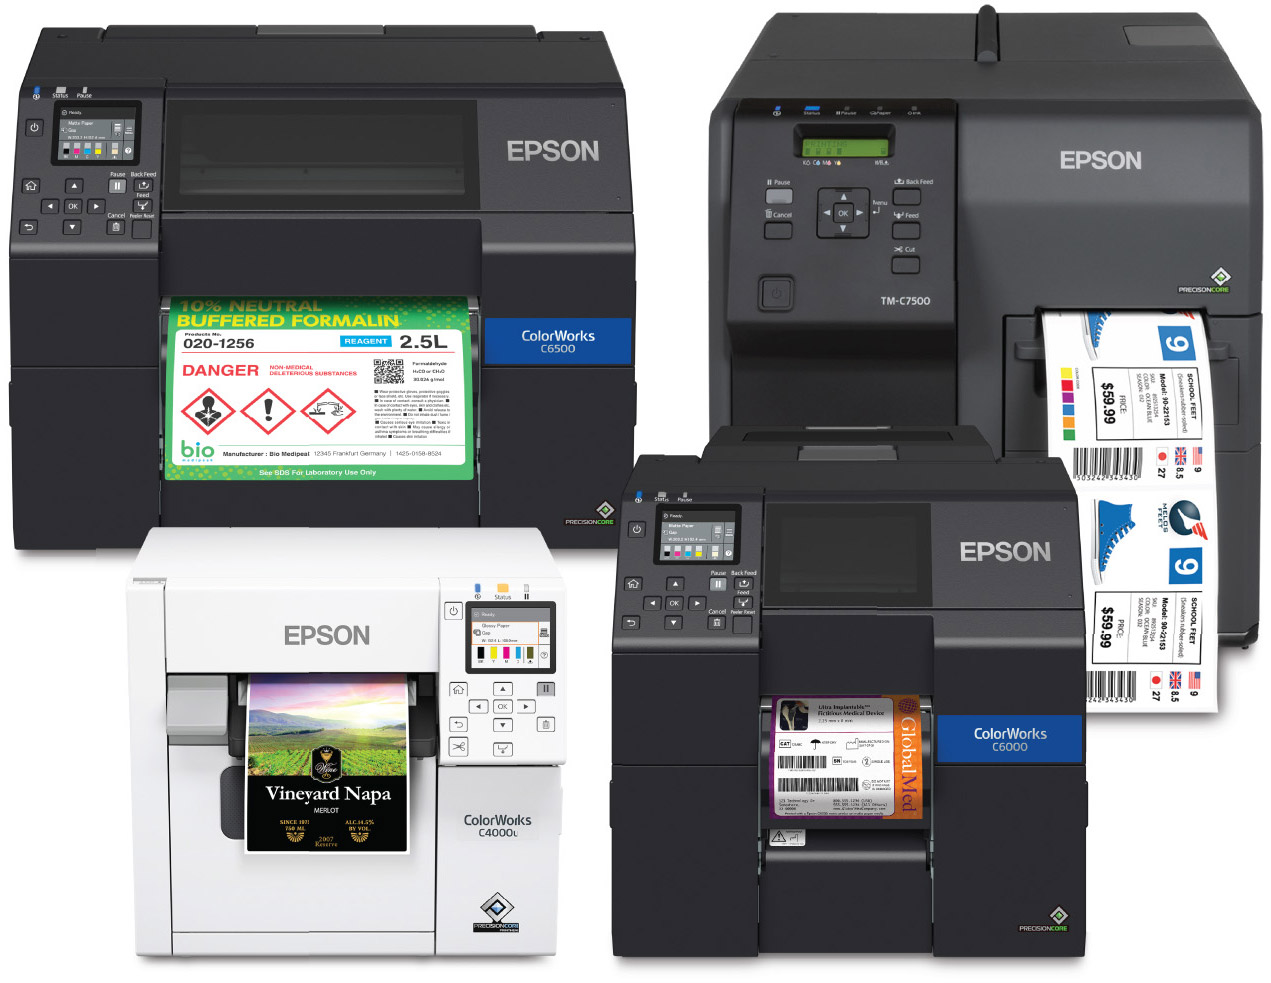 Epson printers series.